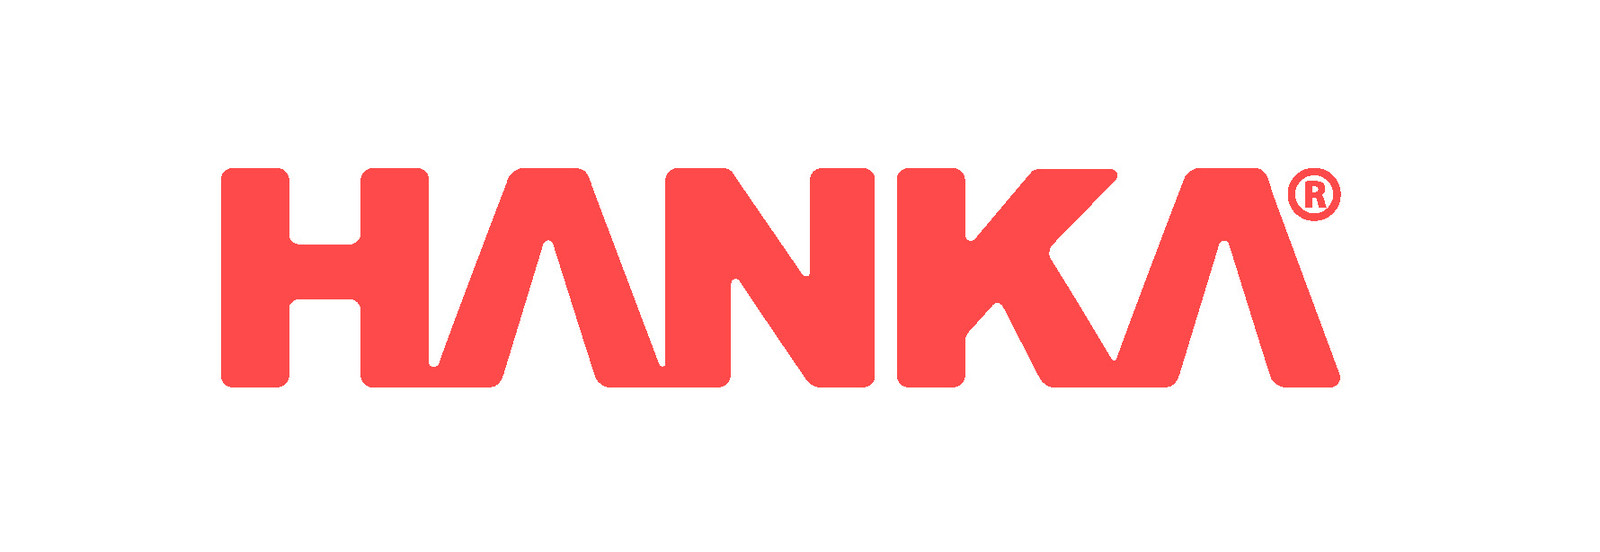 Hanka Logo - Artist: William Bennett